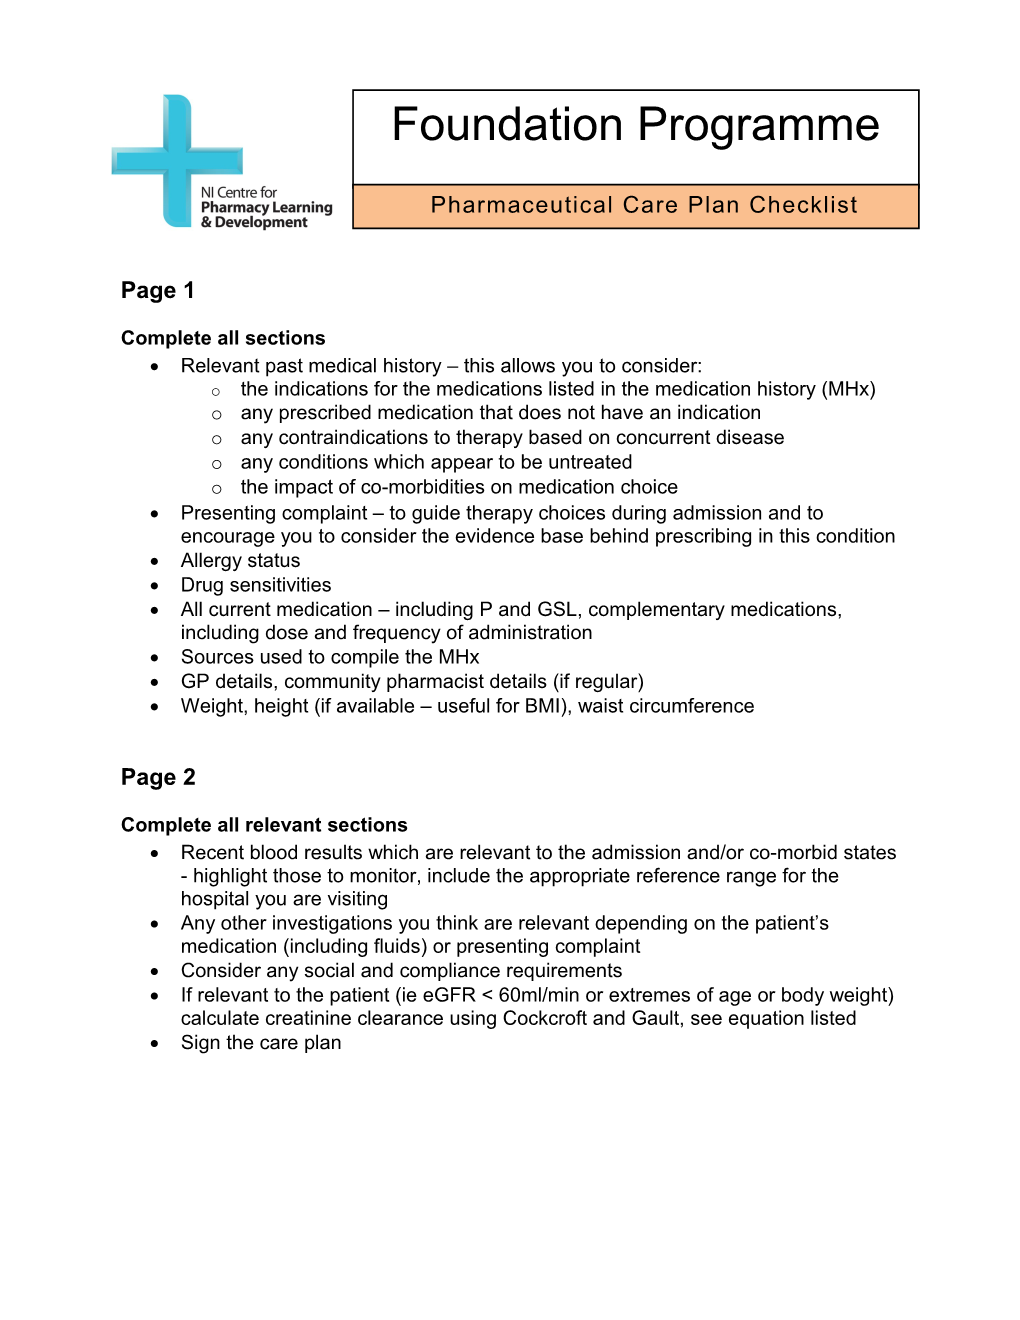 Pharmaceutical Care Plan Criteria Based Checklist